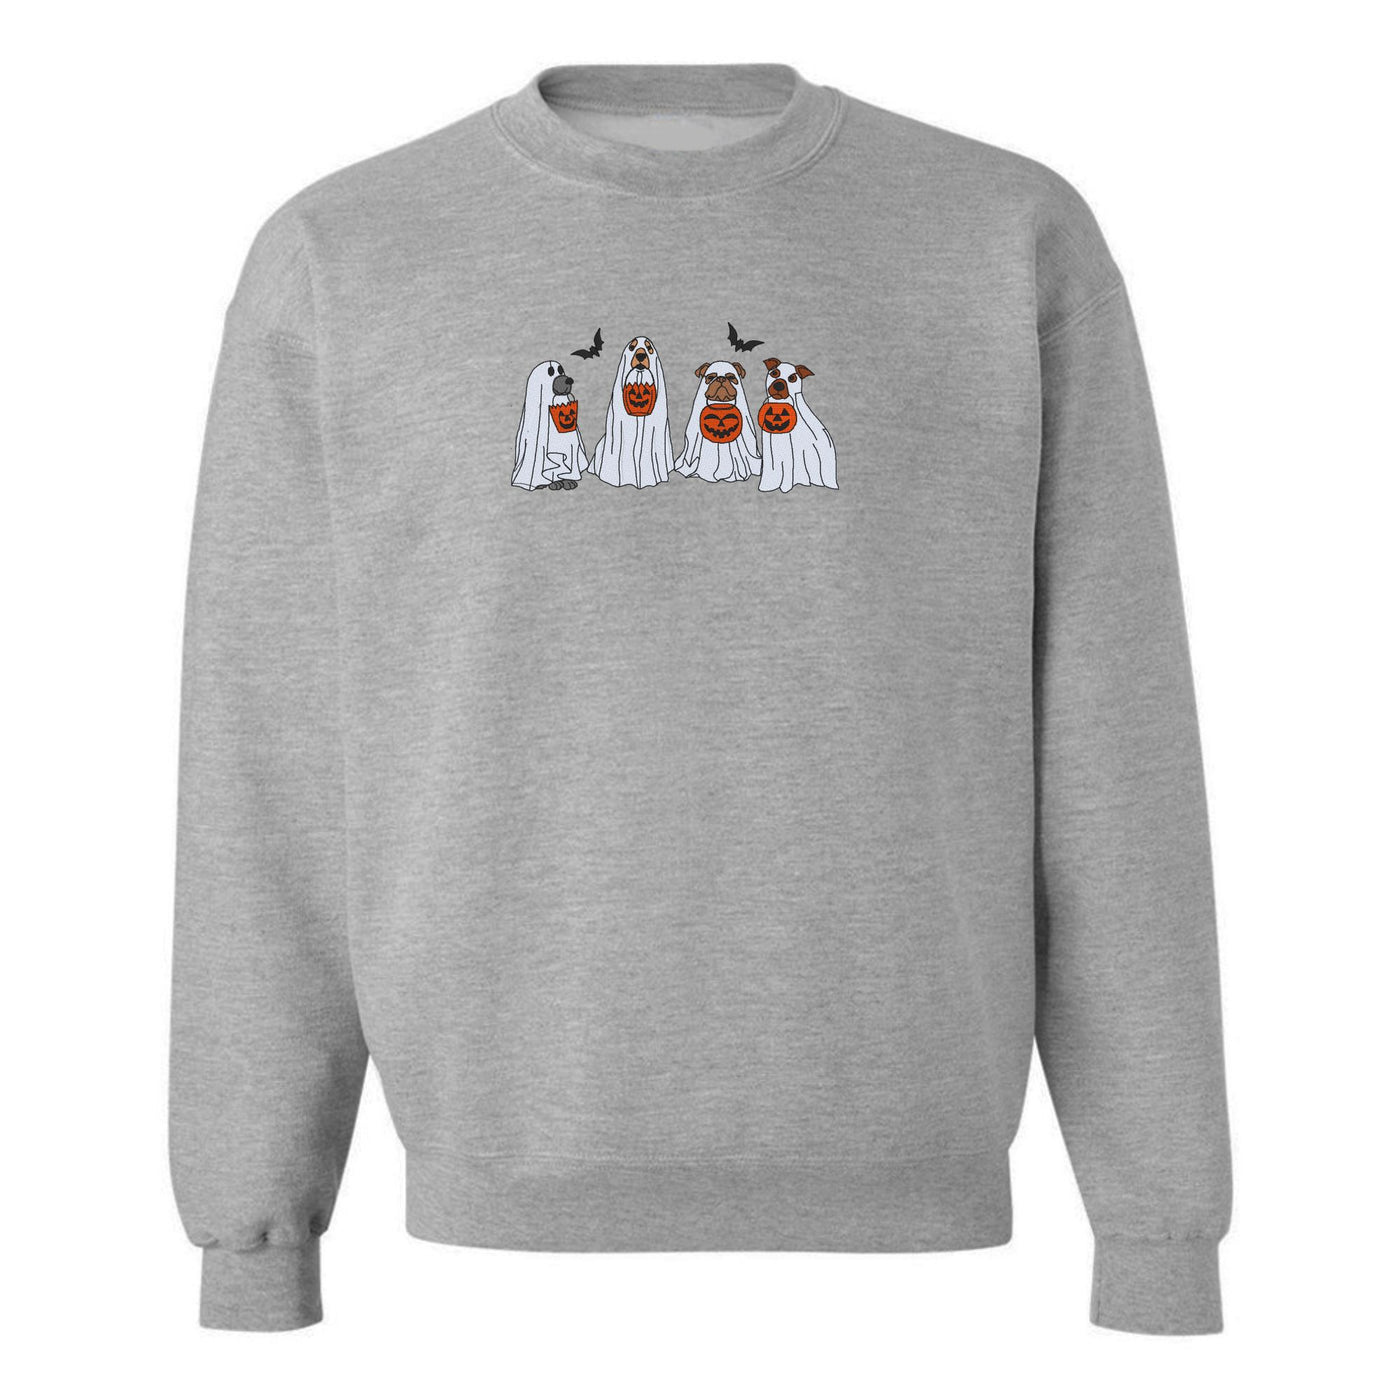 'Ghost Dogs' Embroidered Crewneck Sweatshirt